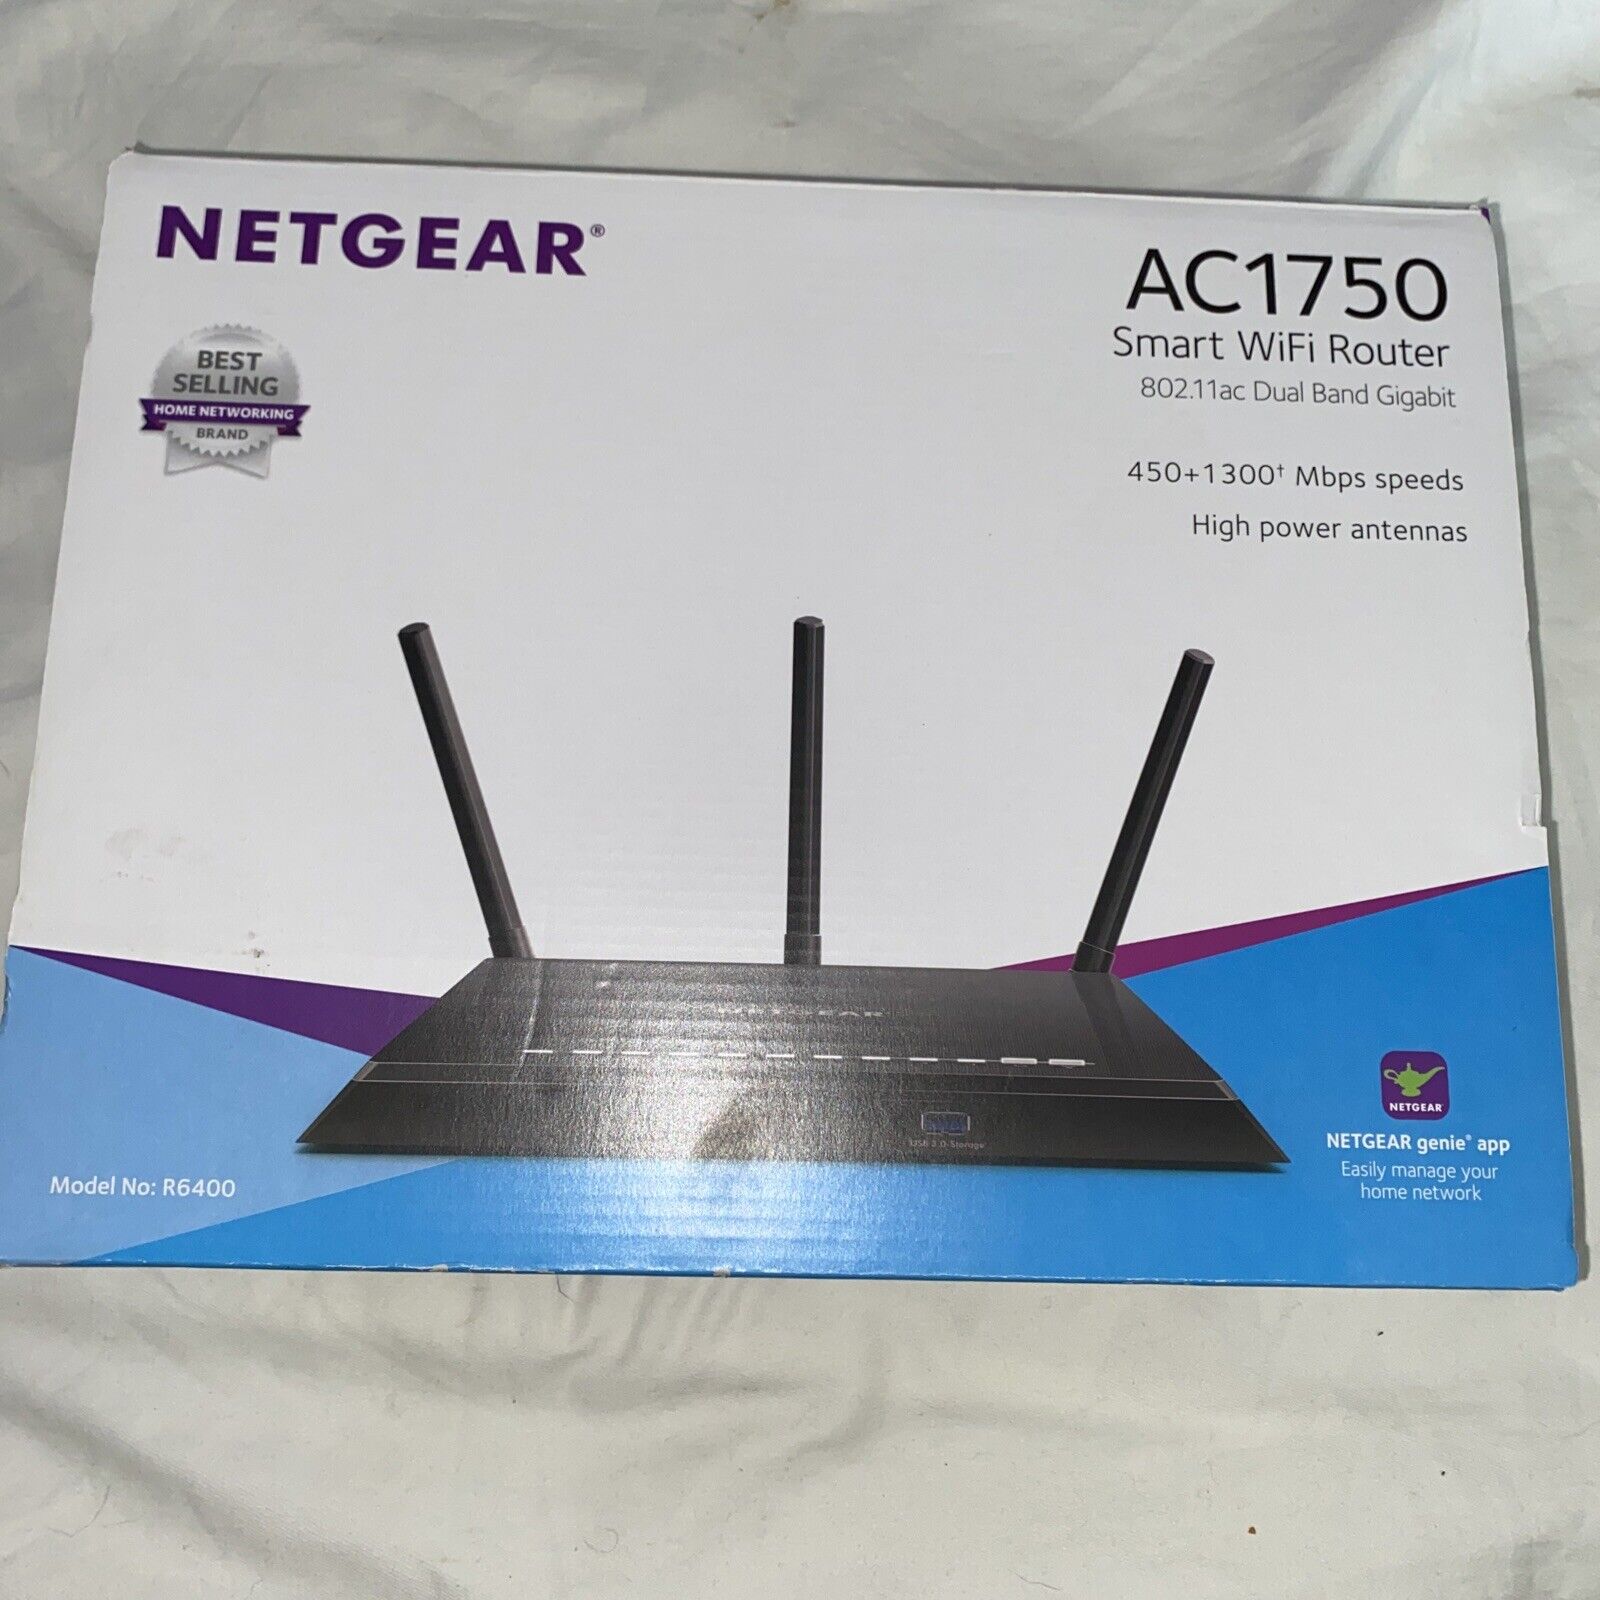 NETGEAR AC1750 Smart Wifi Router 802.11ac Dual Band Gigabit 450+1300Mbps Tested